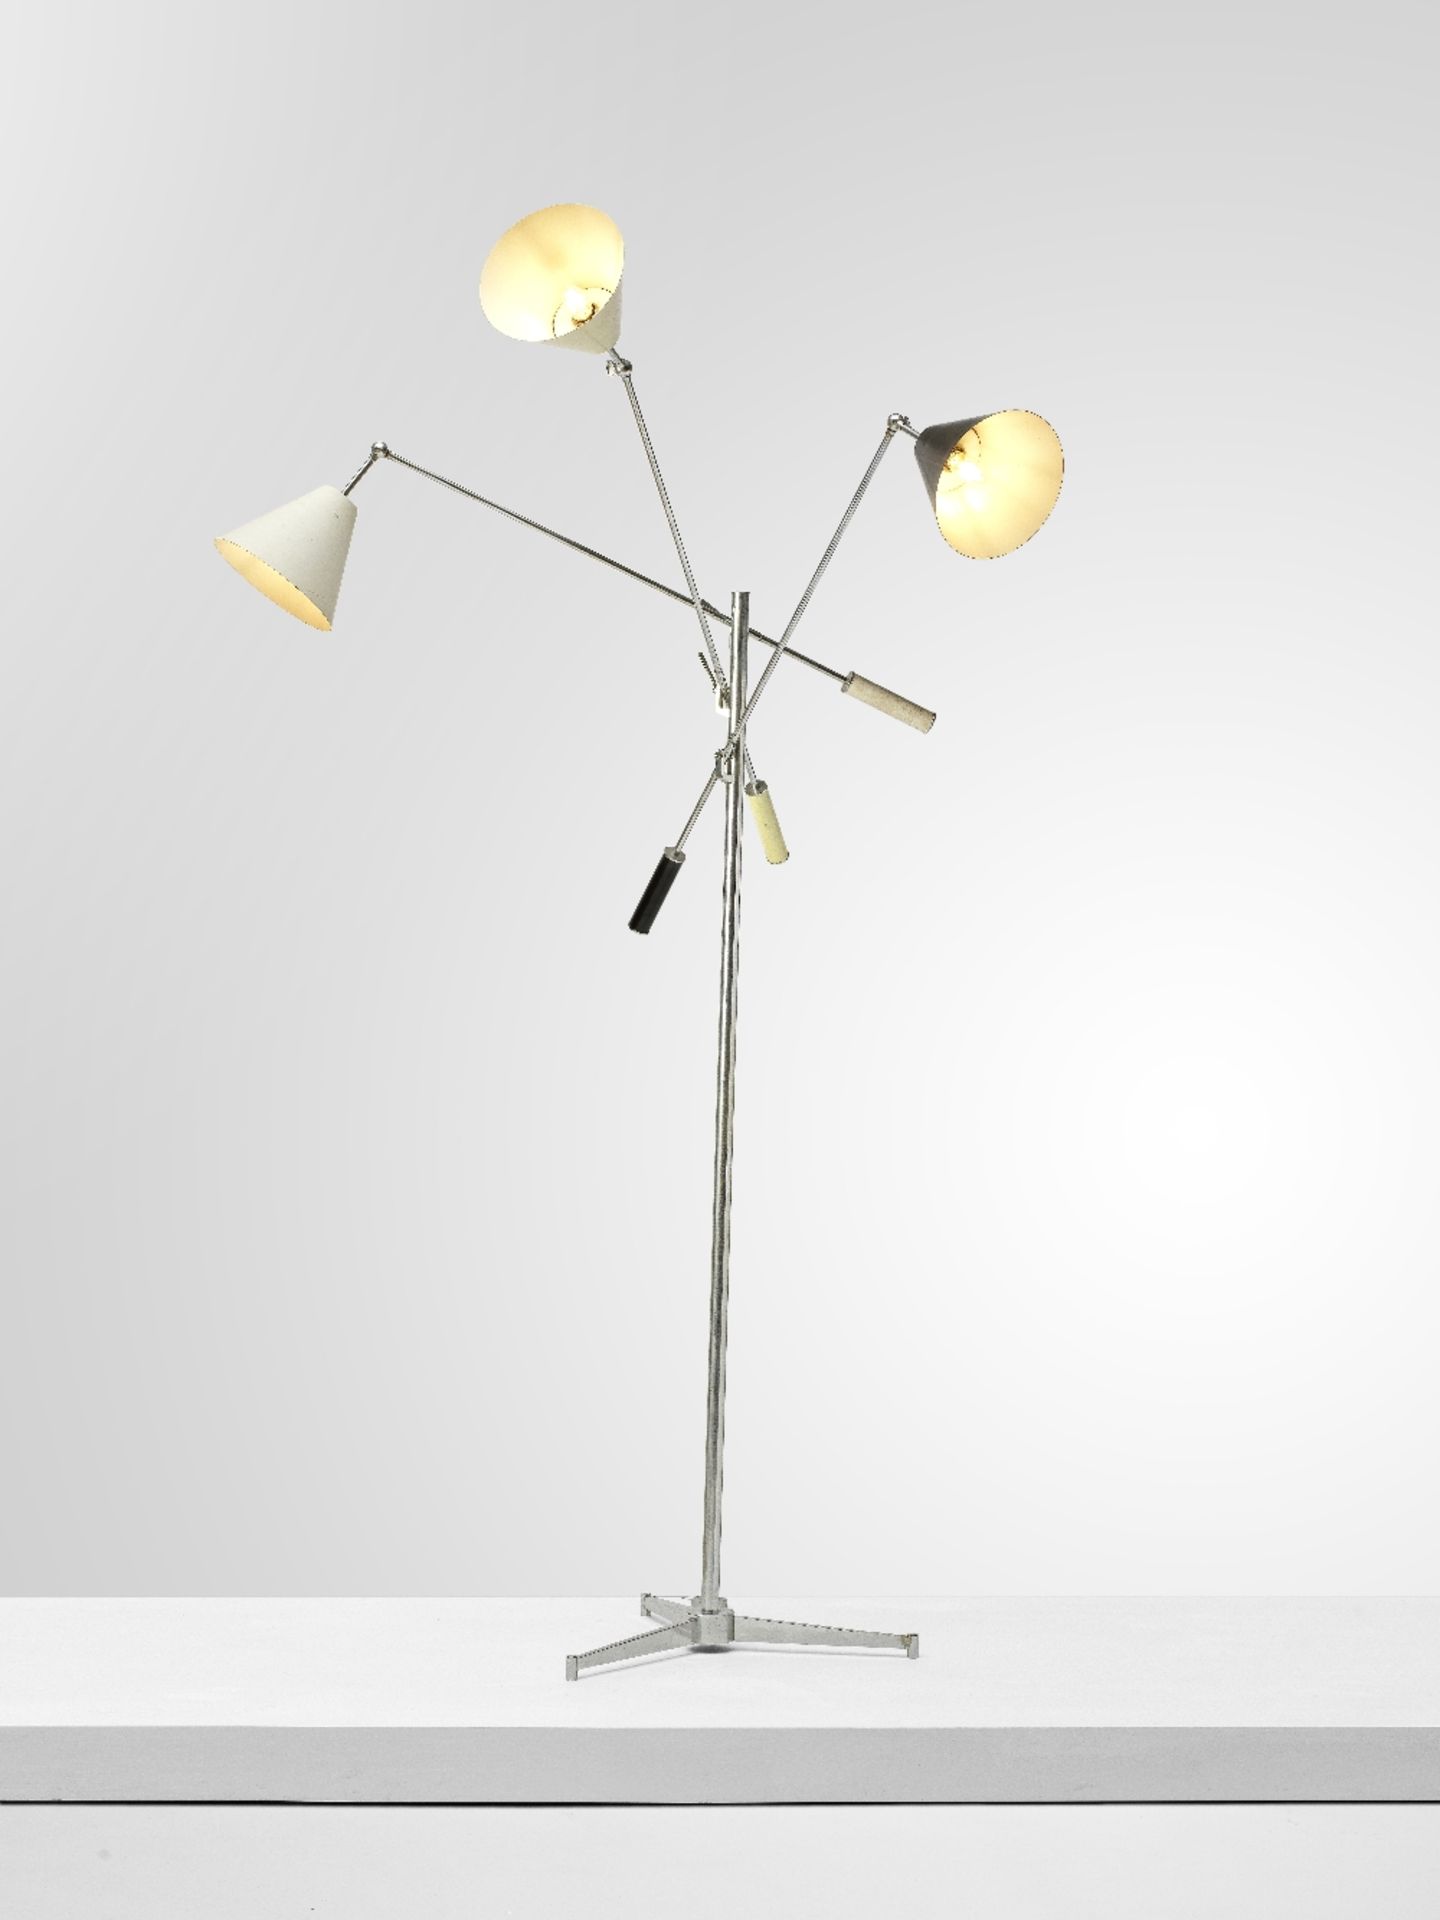 Angelo Lelii 'Triennale' three-armed adjustable floor lamp, model no. 12128s, circa 1951